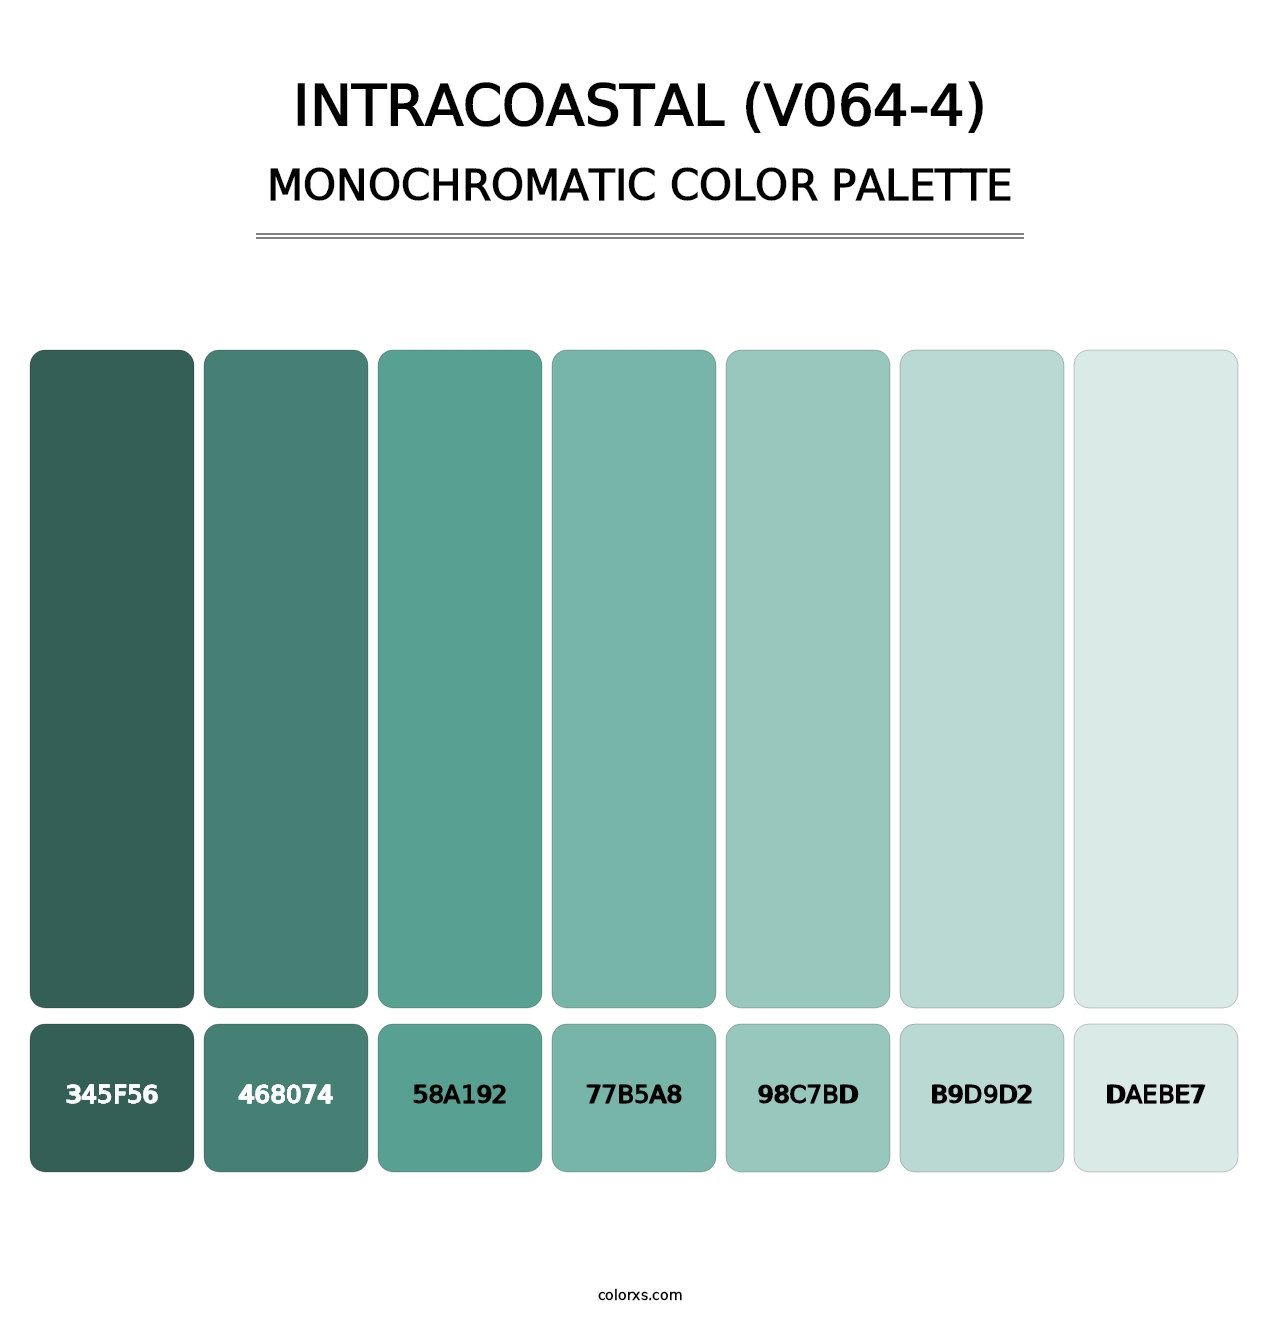 Intracoastal (V064-4) - Monochromatic Color Palette